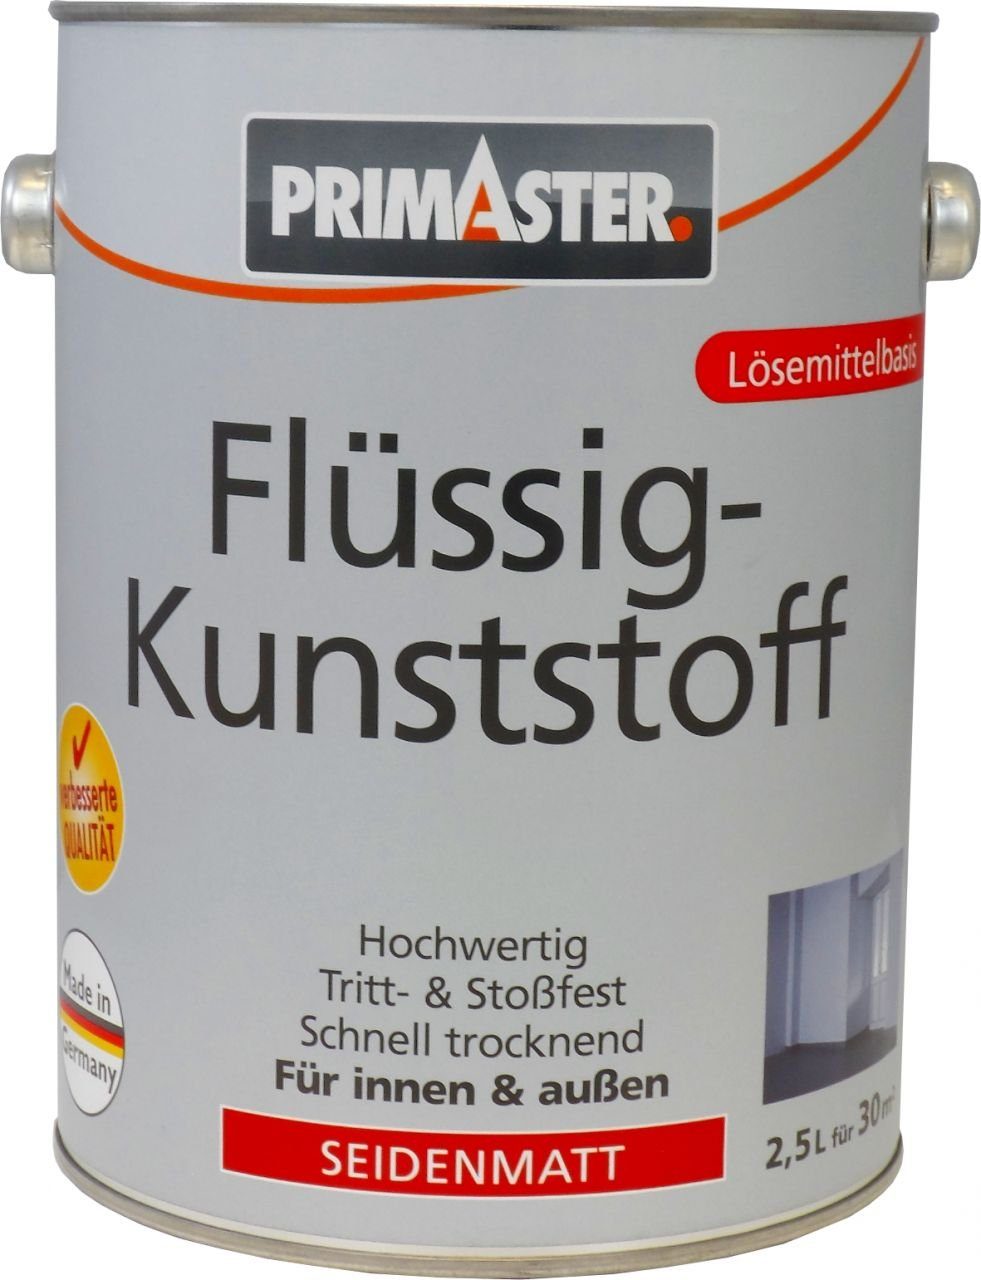 2,5 Premium L Primaster Primaster RAL Acryl-Flüssigkunststoff Flüssigkunststoff 9010